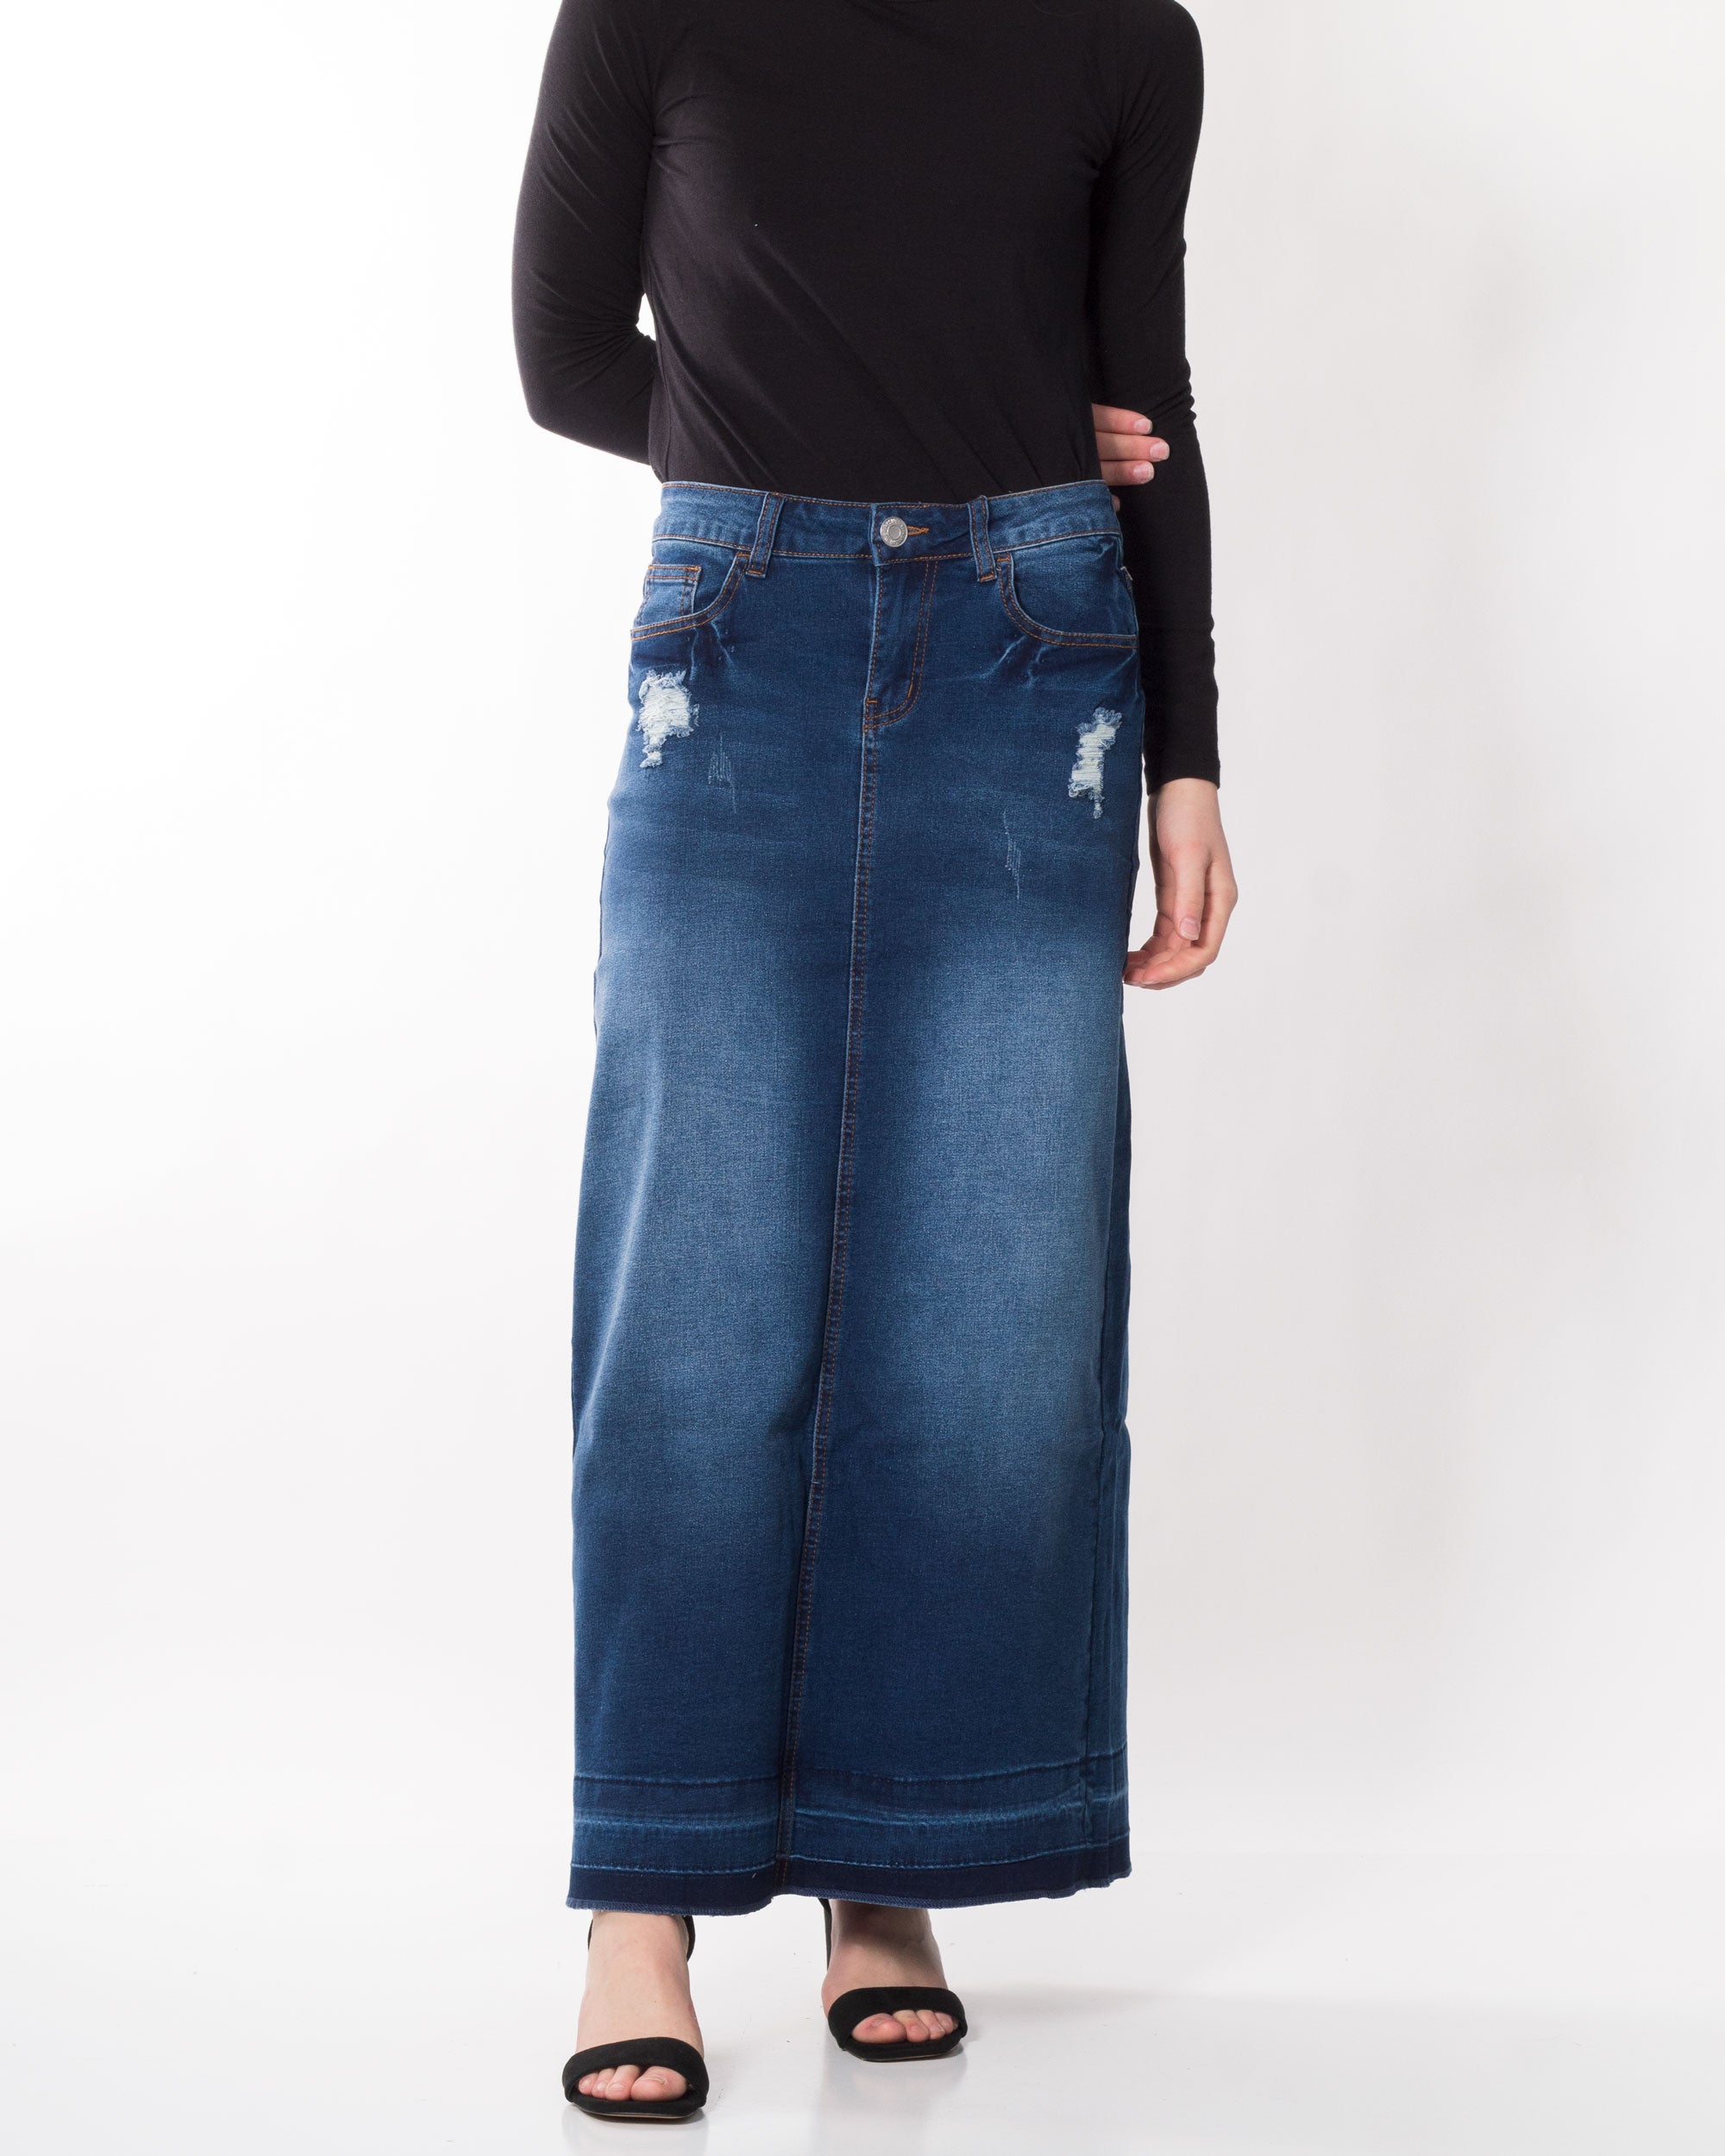 Sabrina's Maxi Denim Skirt